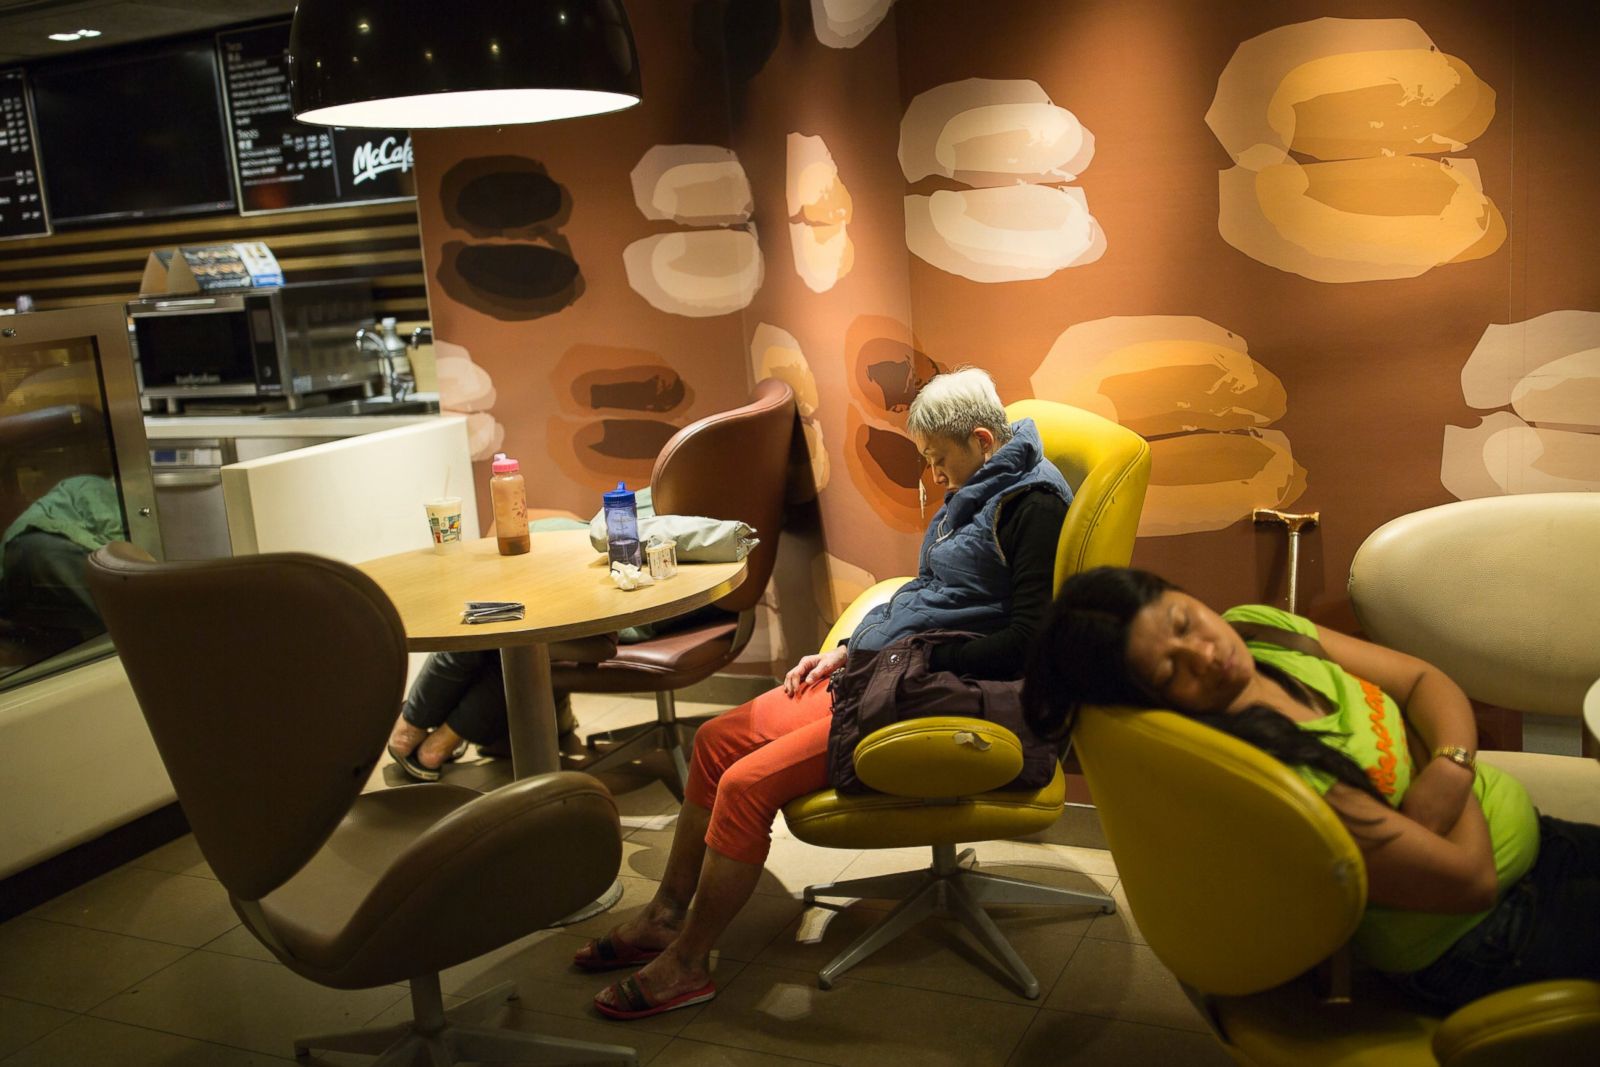 Picture | Sleepers Haunt Hong Kong McDonald's Restaurants - ABC News